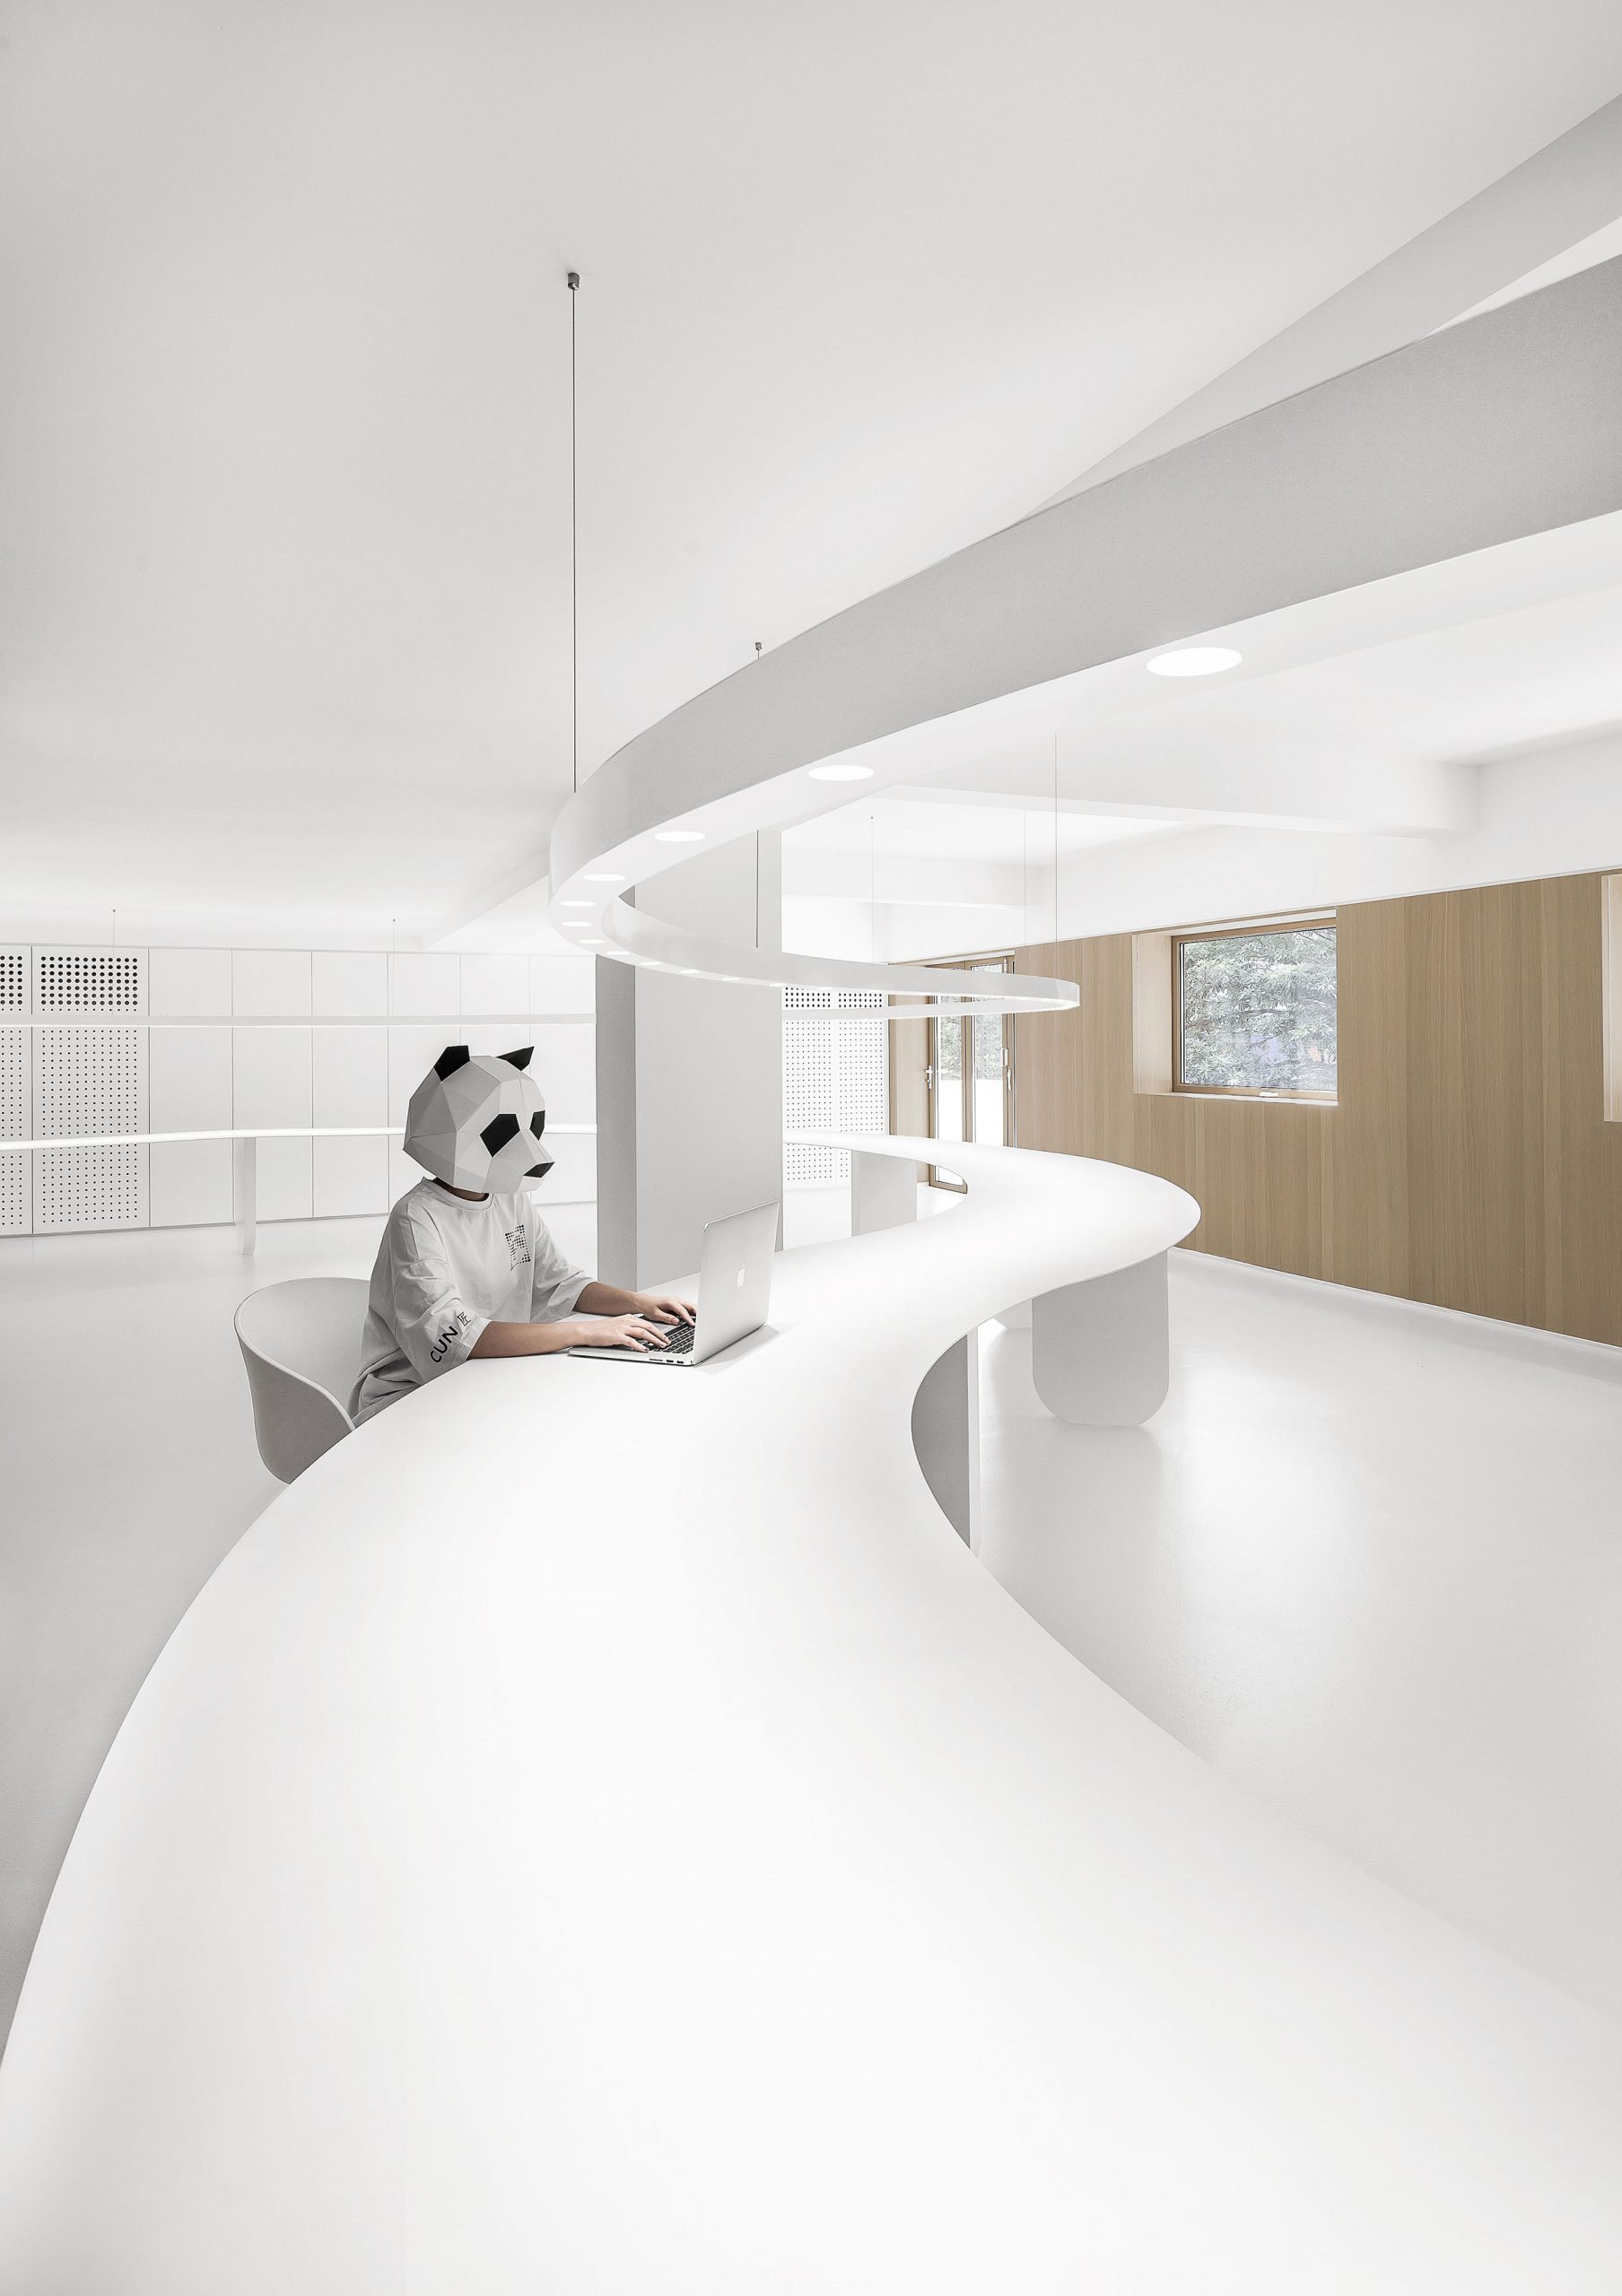 CUN|PANDA, a new office space in Xiamen